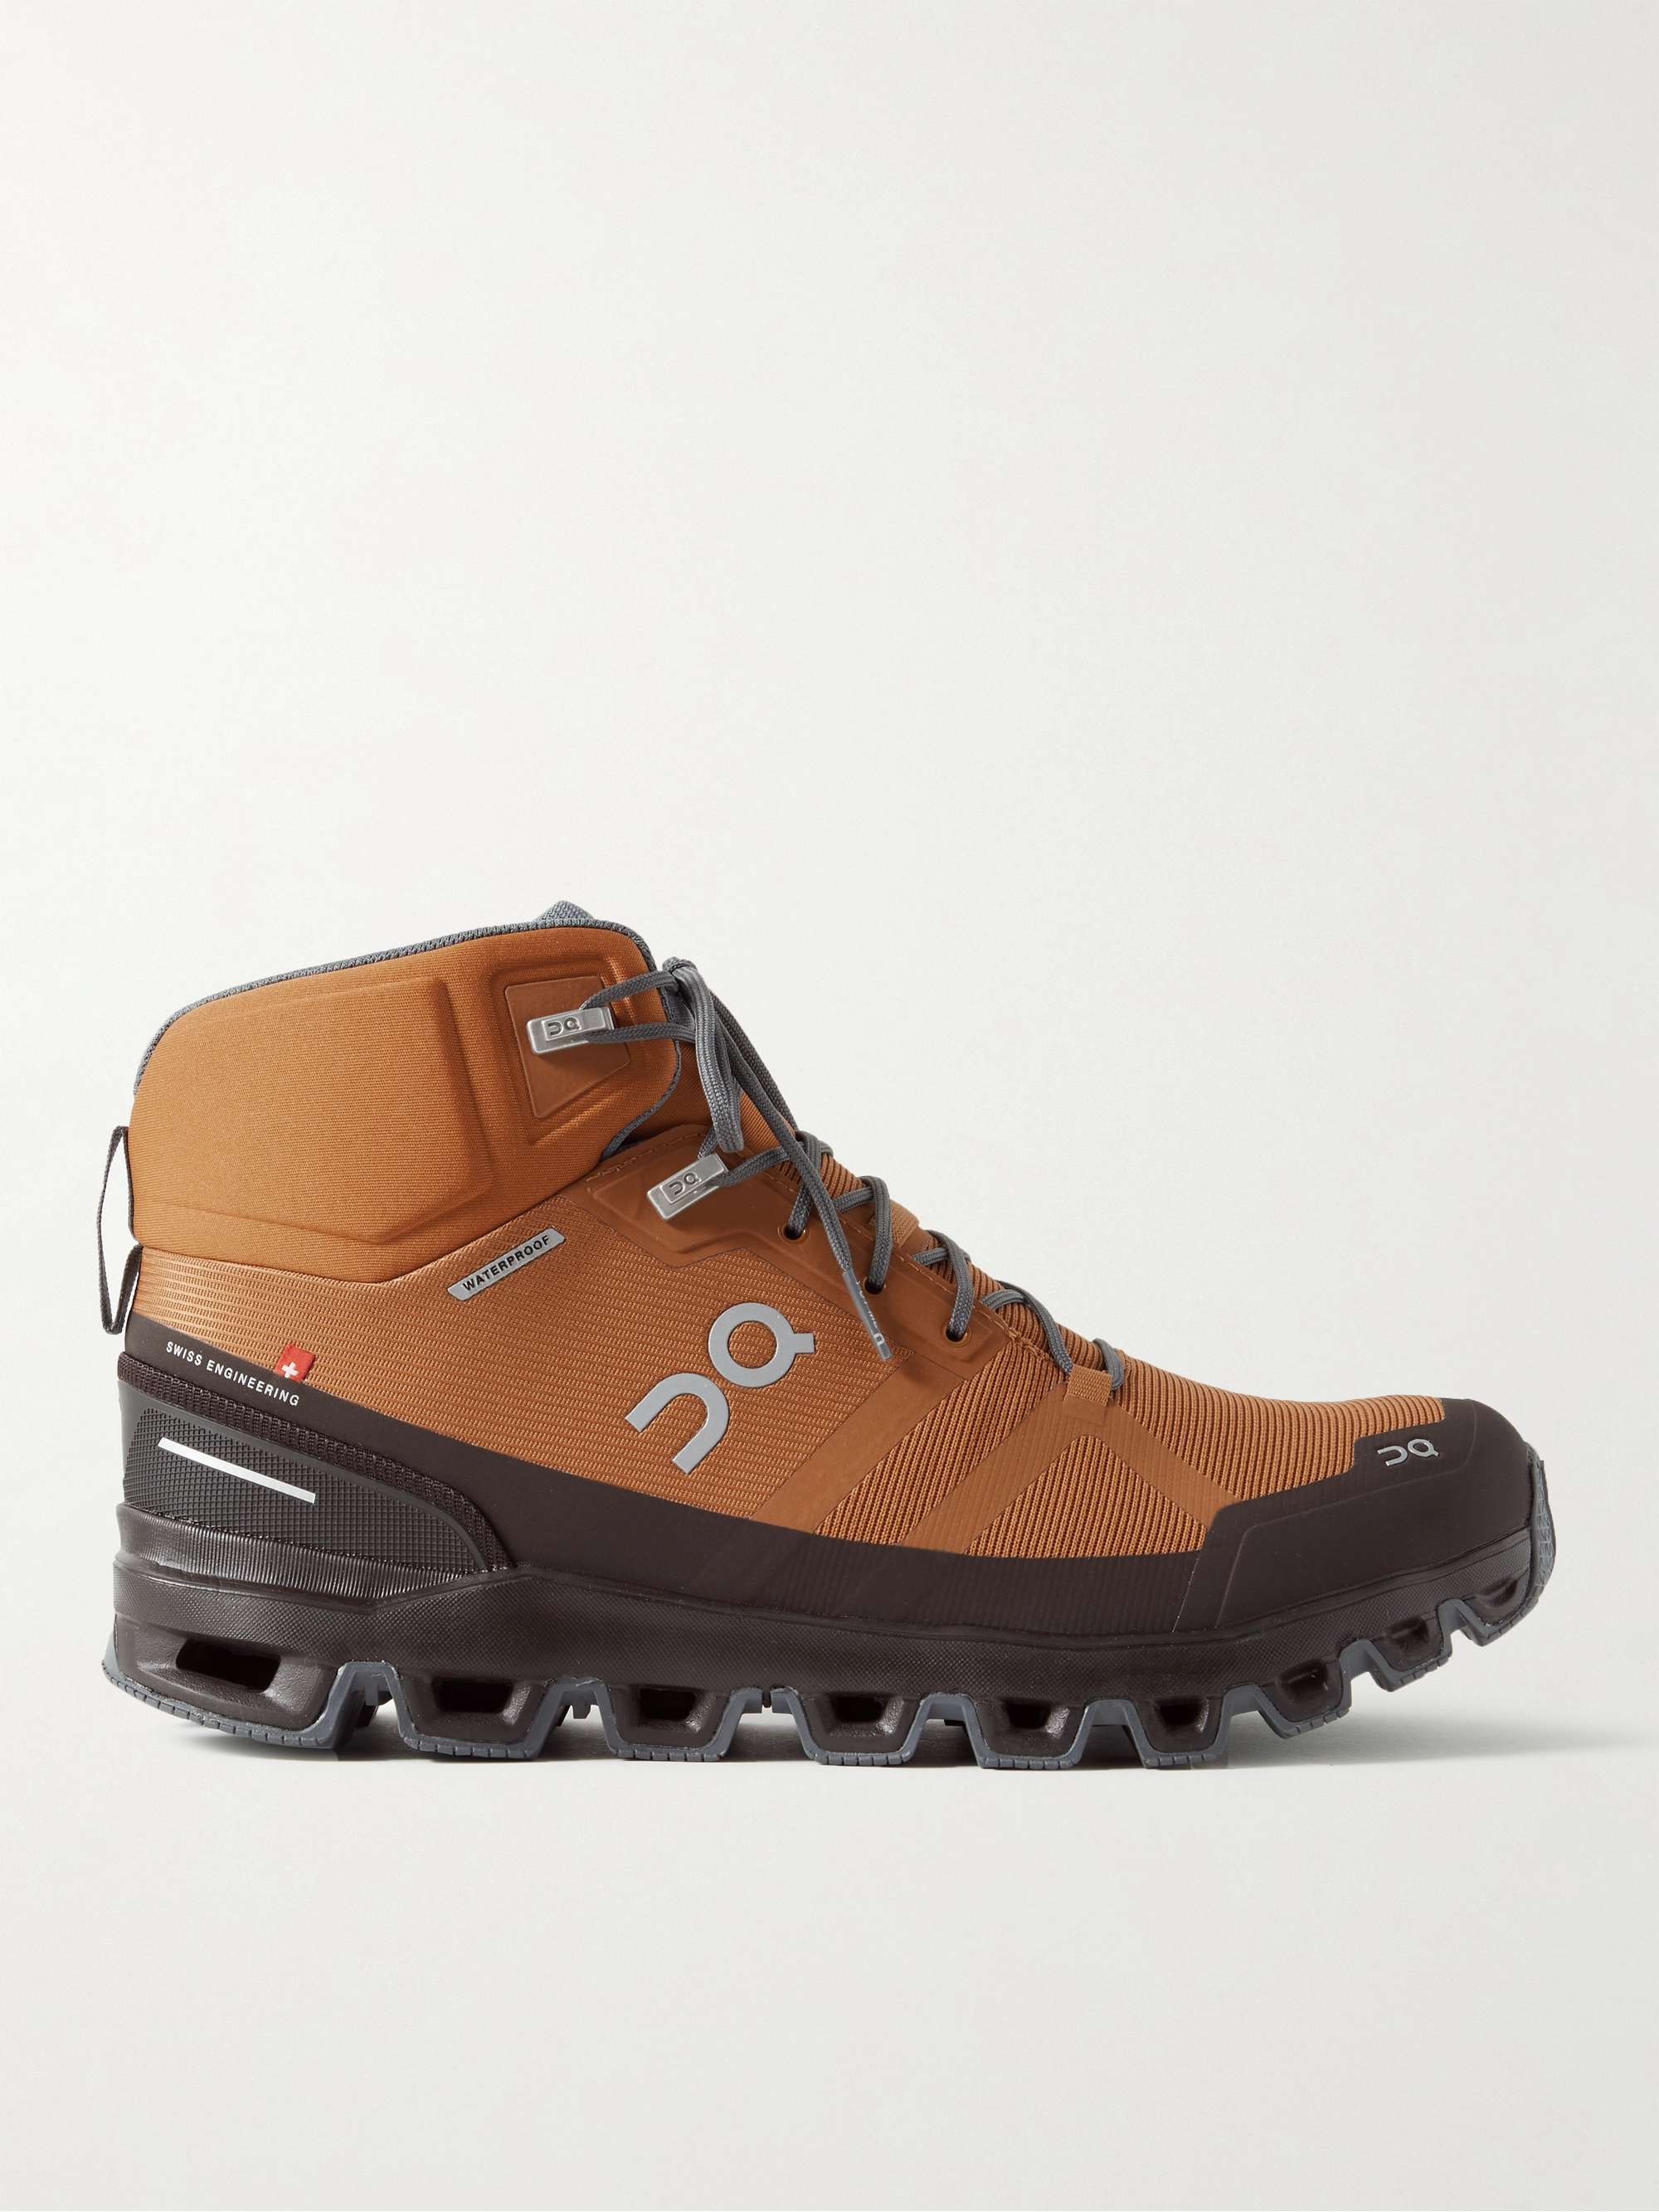 ON Cloudrock Waterproof Mesh Hiking Boots